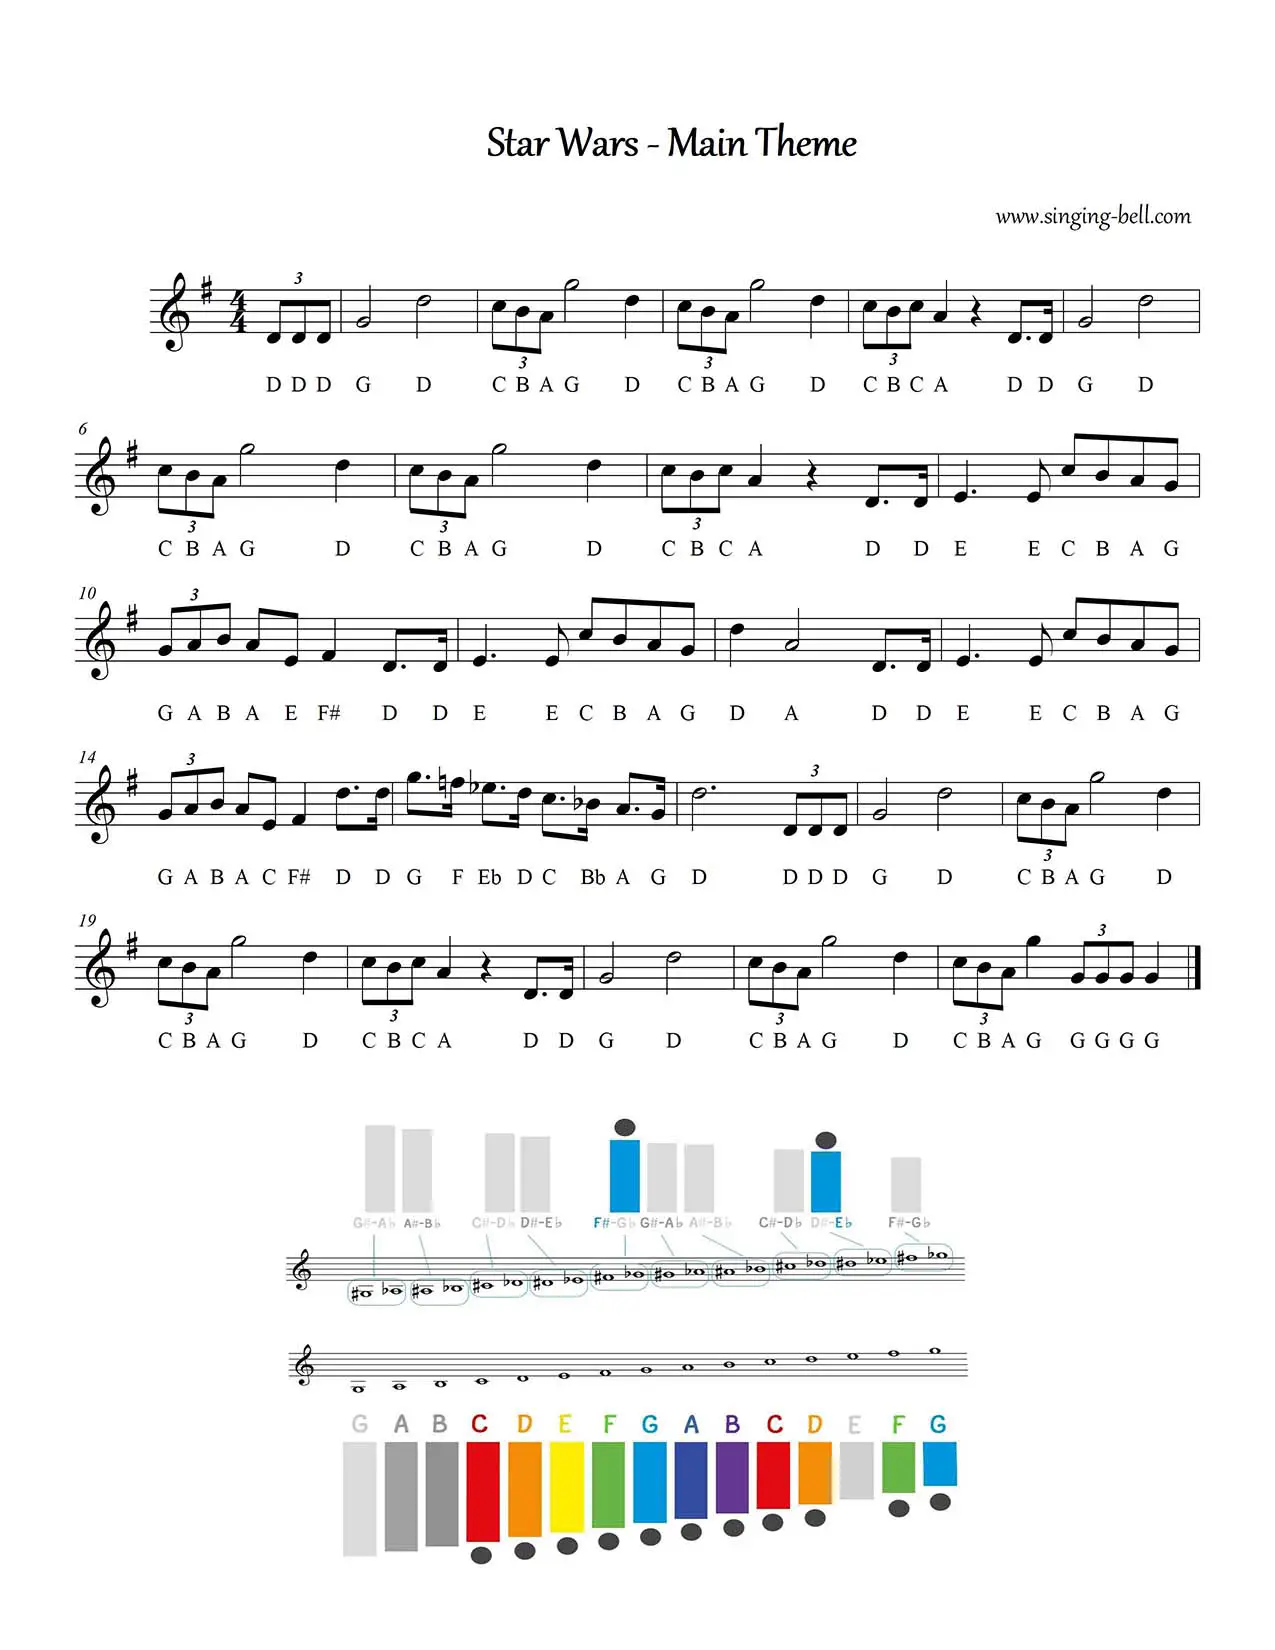 Star Wars Main Theme free xylophone glockenspiel sheet music notes chart pdf